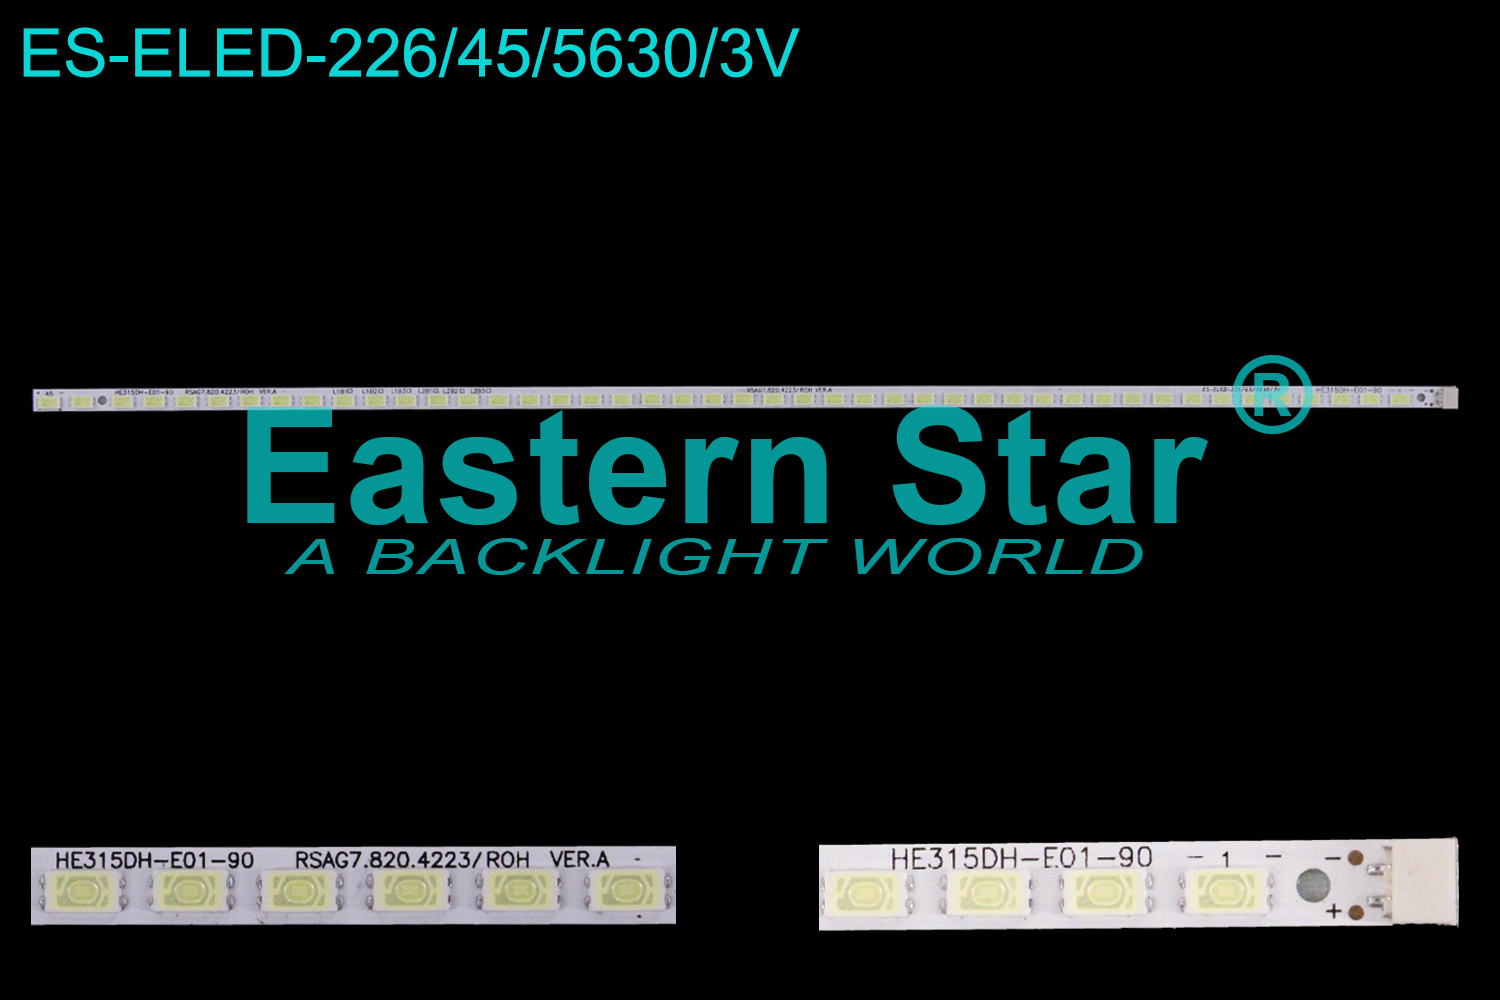 ES-ELED-226 ELED/EDGE TV backlight 32'' use for Hisense 45LEDs HE315DH-E01-90 RASG.820 4223/ROH VER.A LED STRIPS(2)